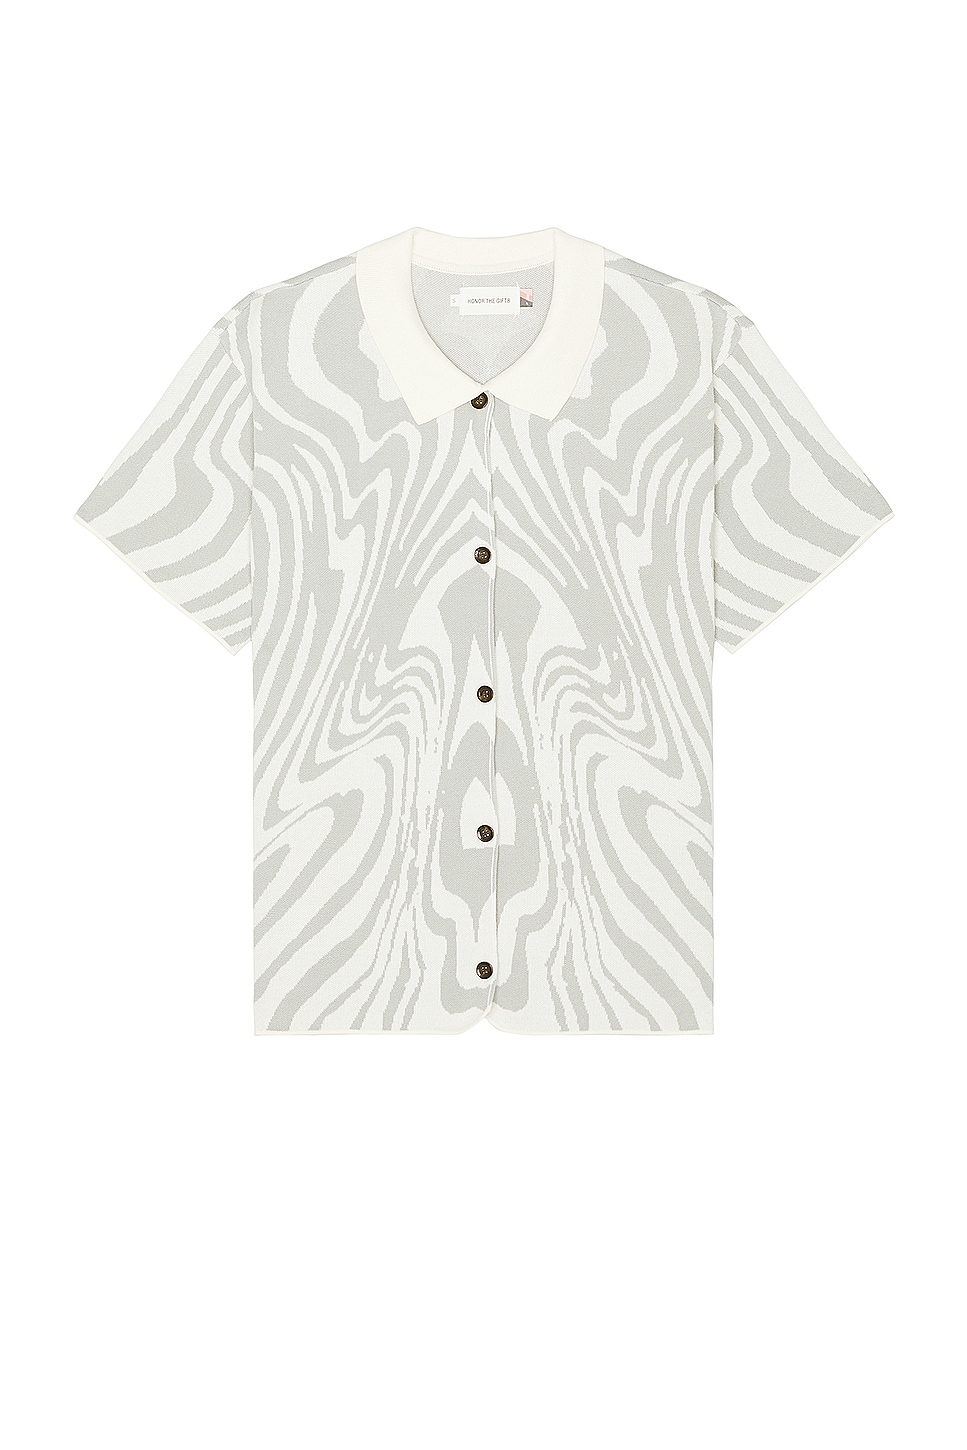 A-spring Dazed Button Up Shirt in Cream